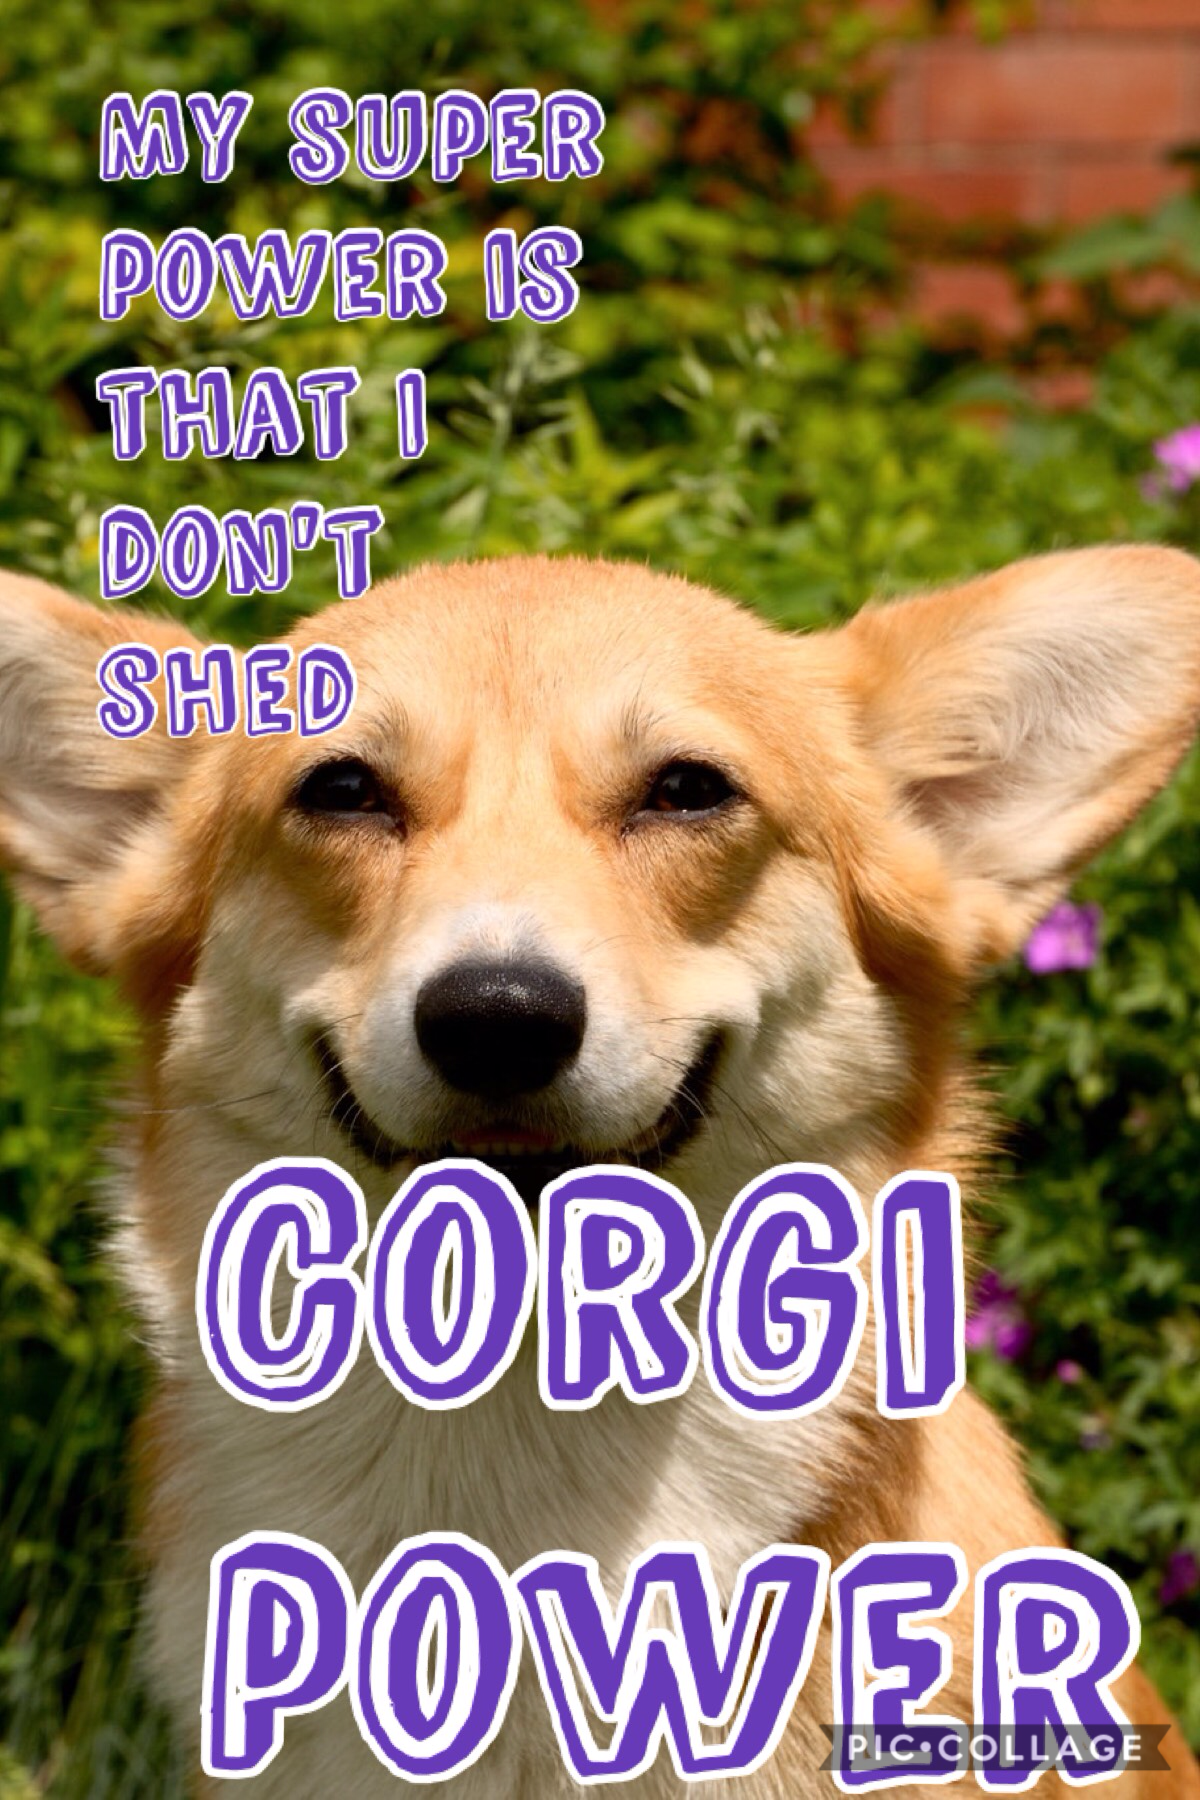 Tap
I really want a corgi
#corgipower